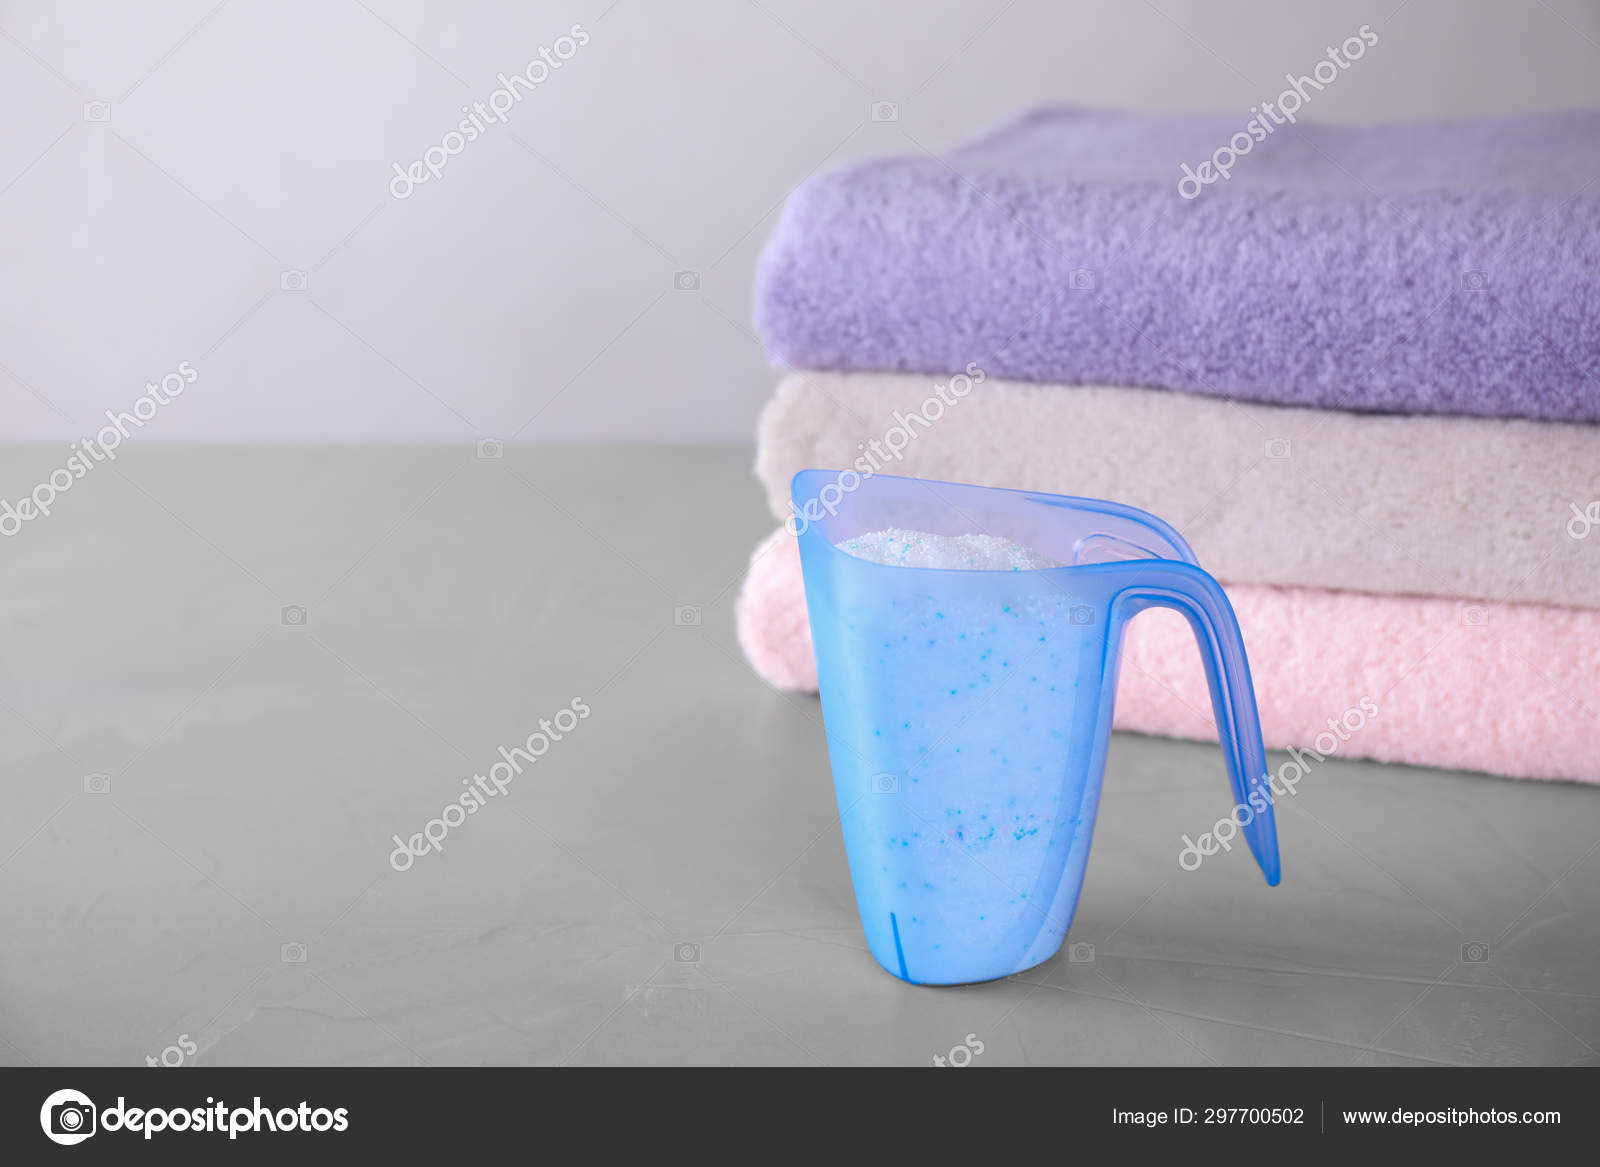 https://st4.depositphotos.com/16122460/29770/i/1600/depositphotos_297700502-stock-photo-measuring-cup-of-laundry-powder.jpg